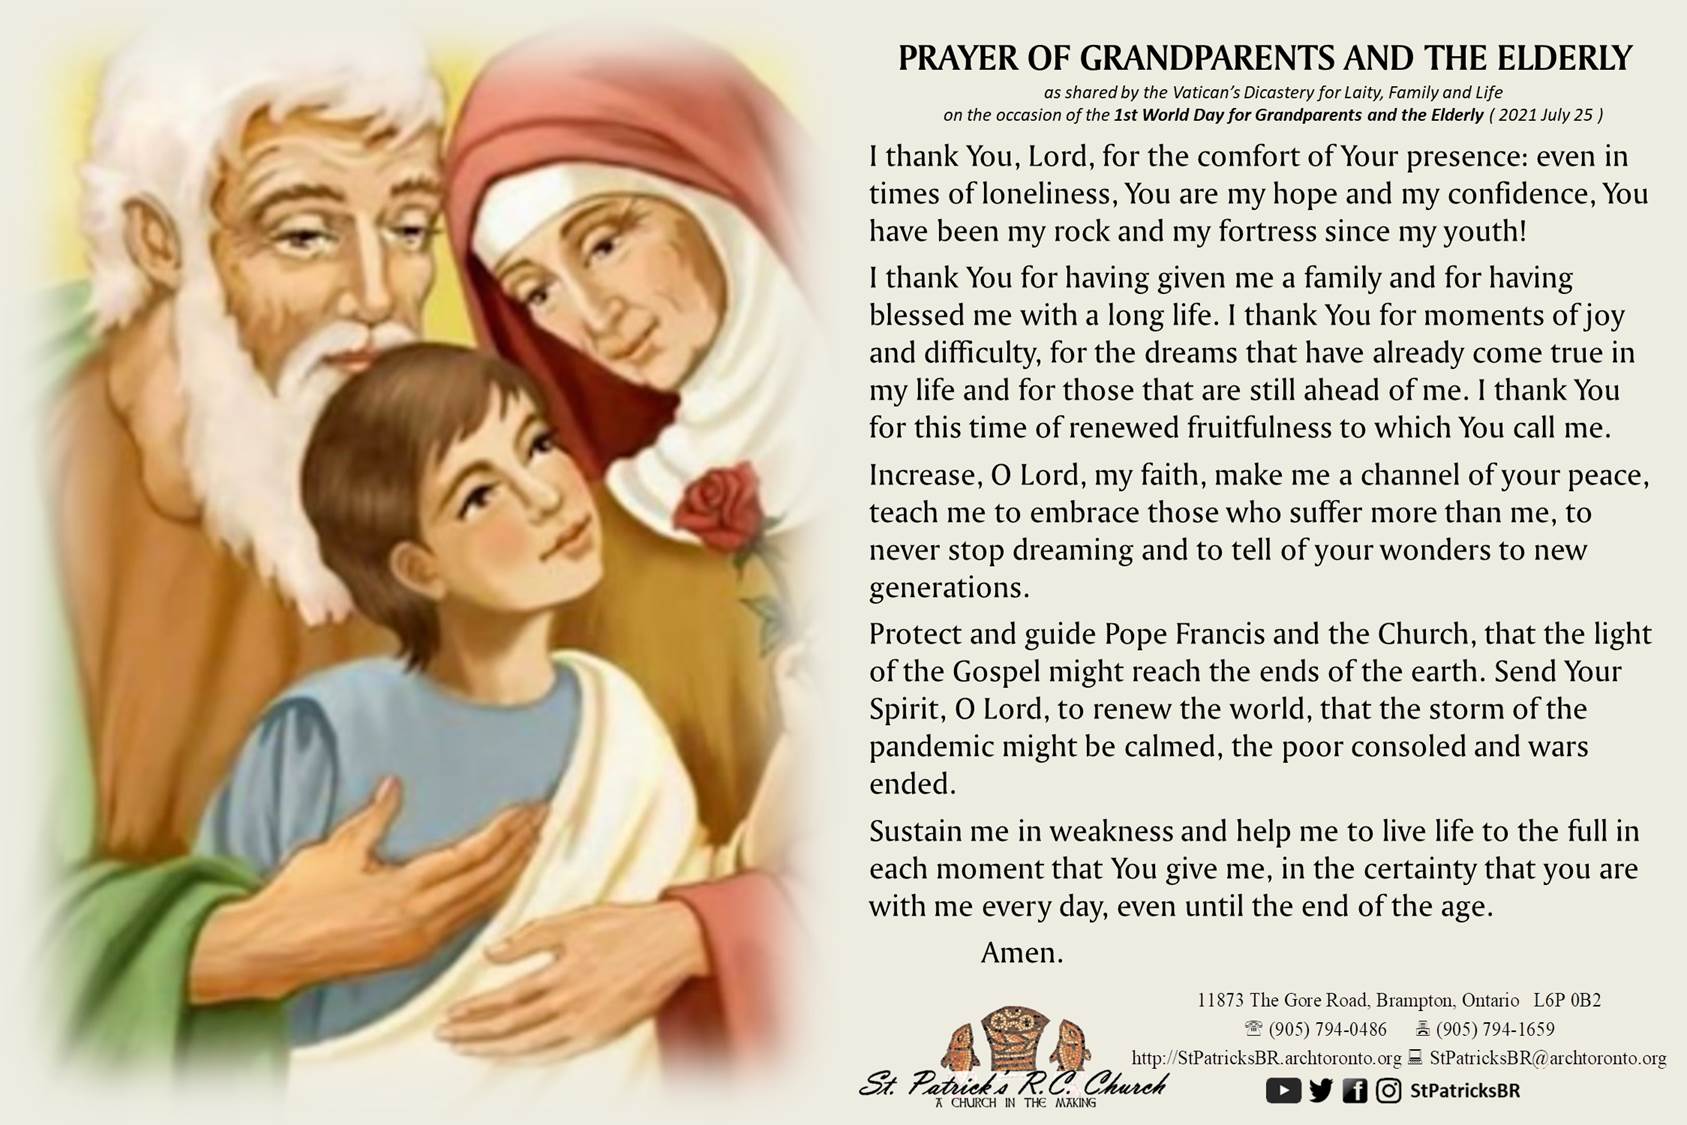 Prayer of Grandparents and the Elderly (1st World Day for Grandparents and the Elderly)